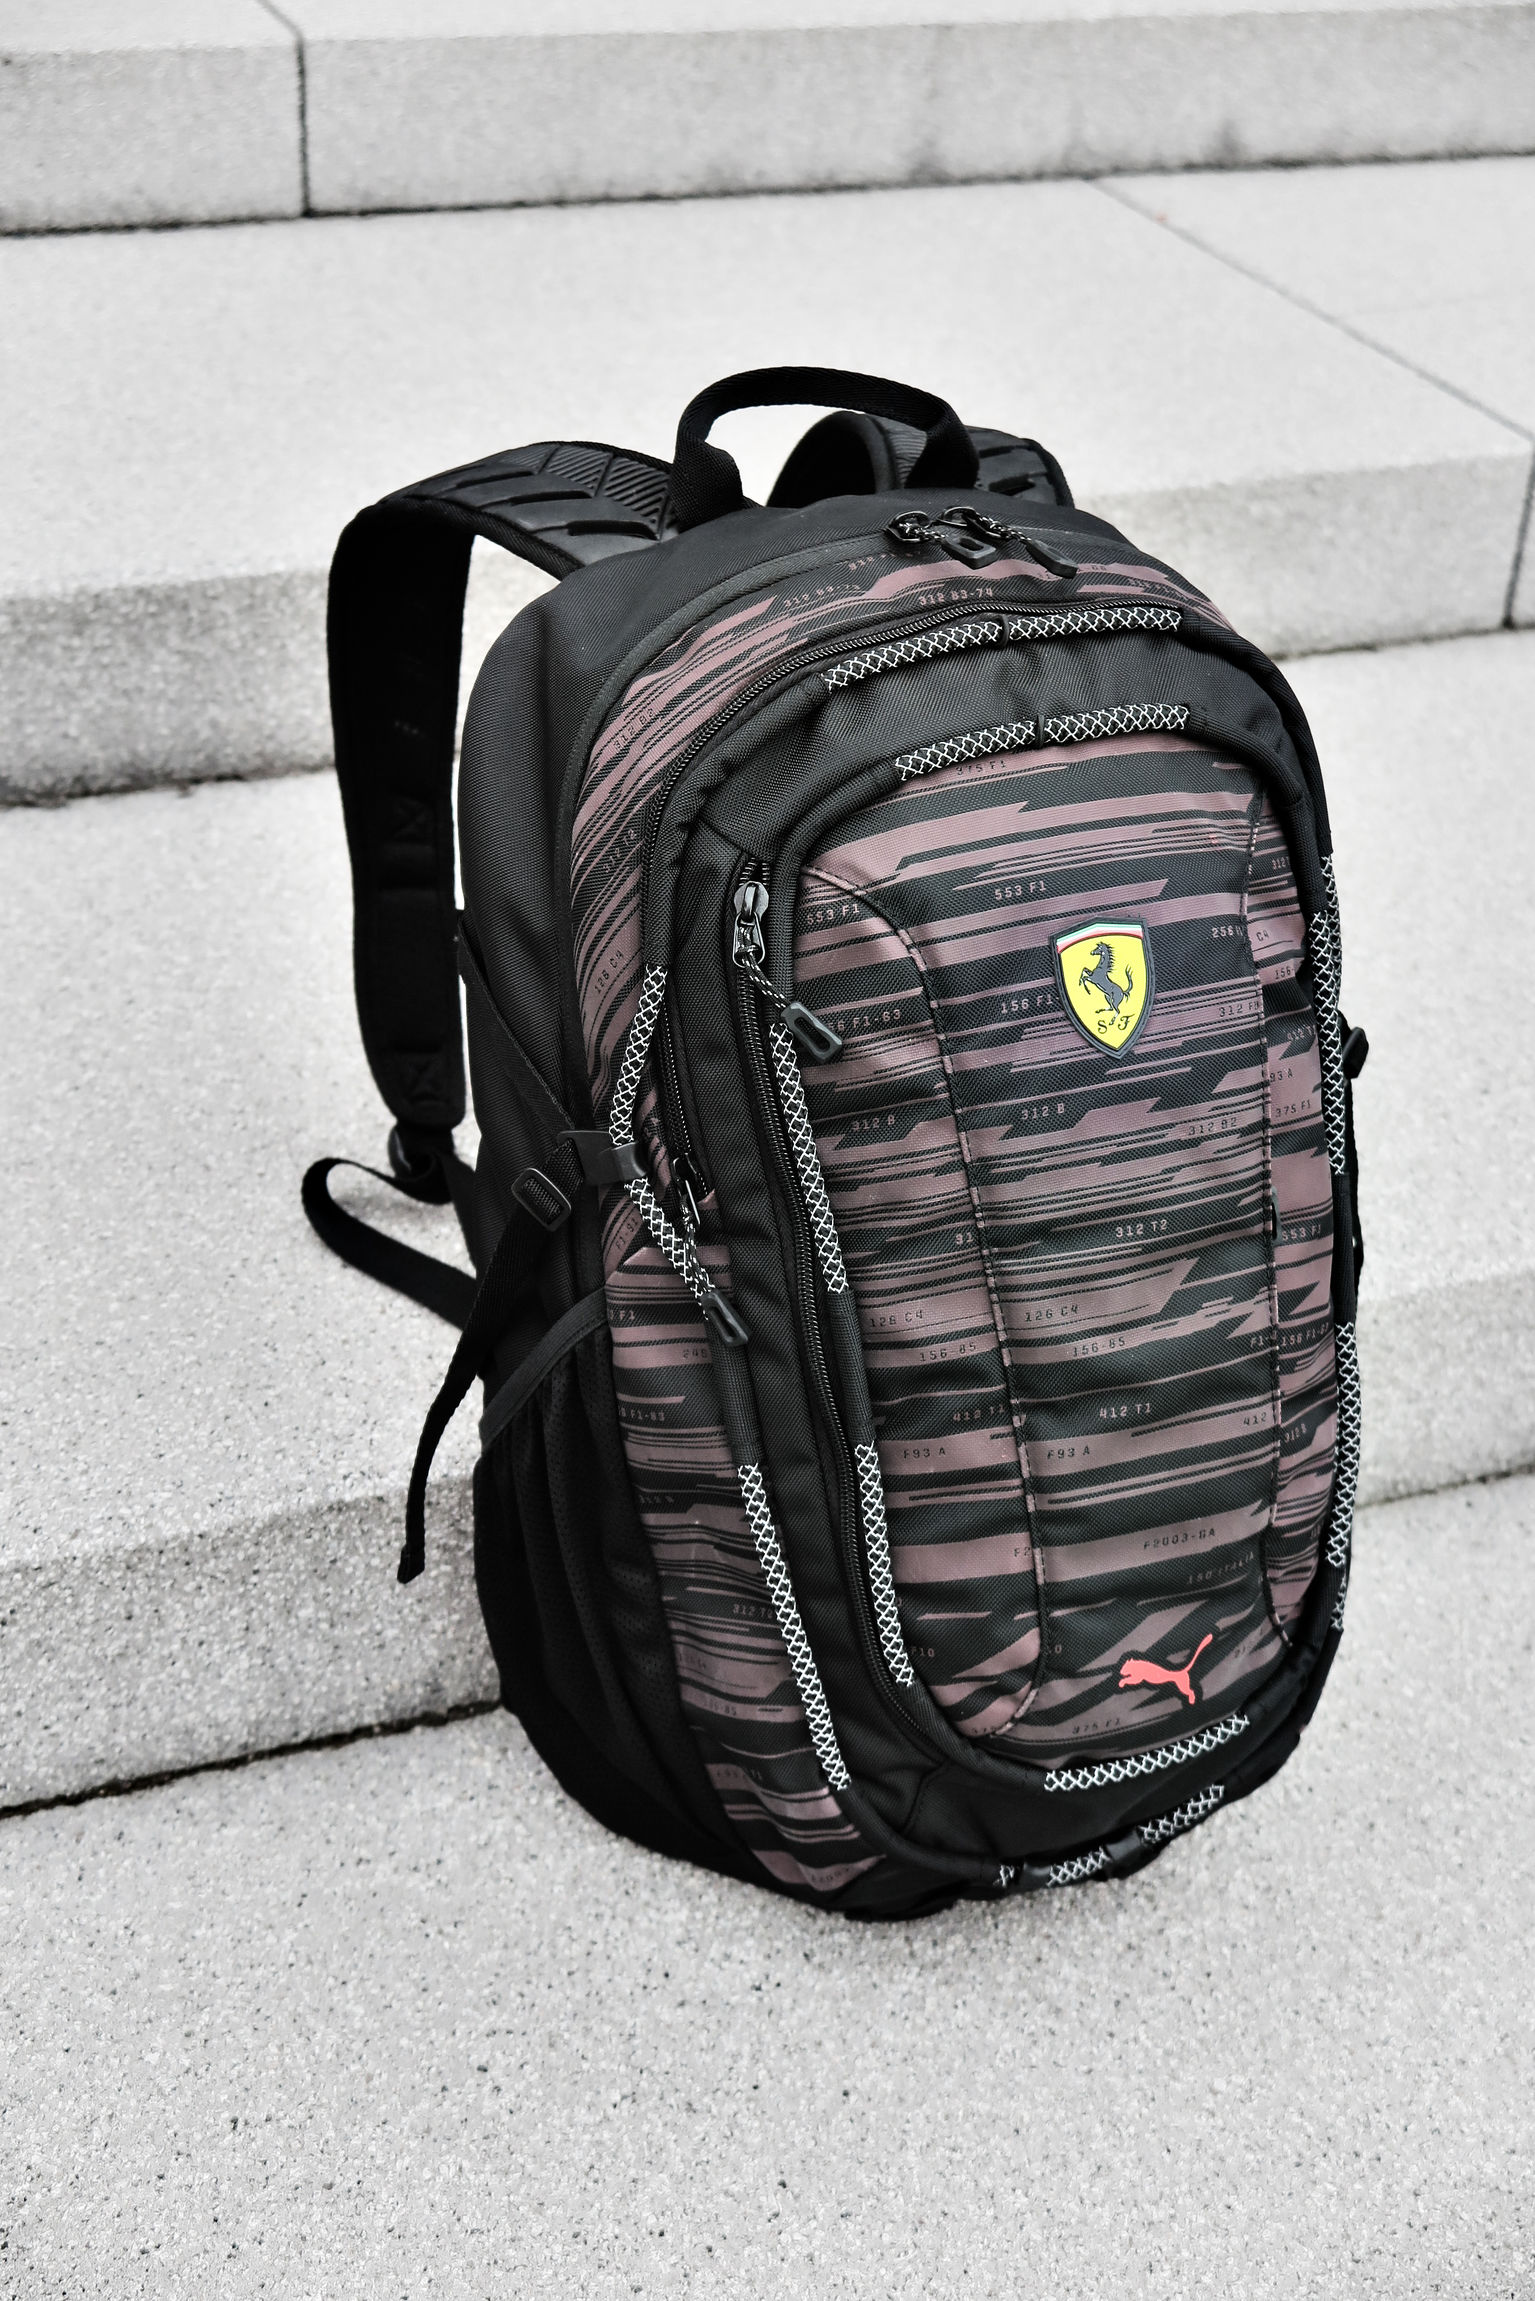 puma line print backpack